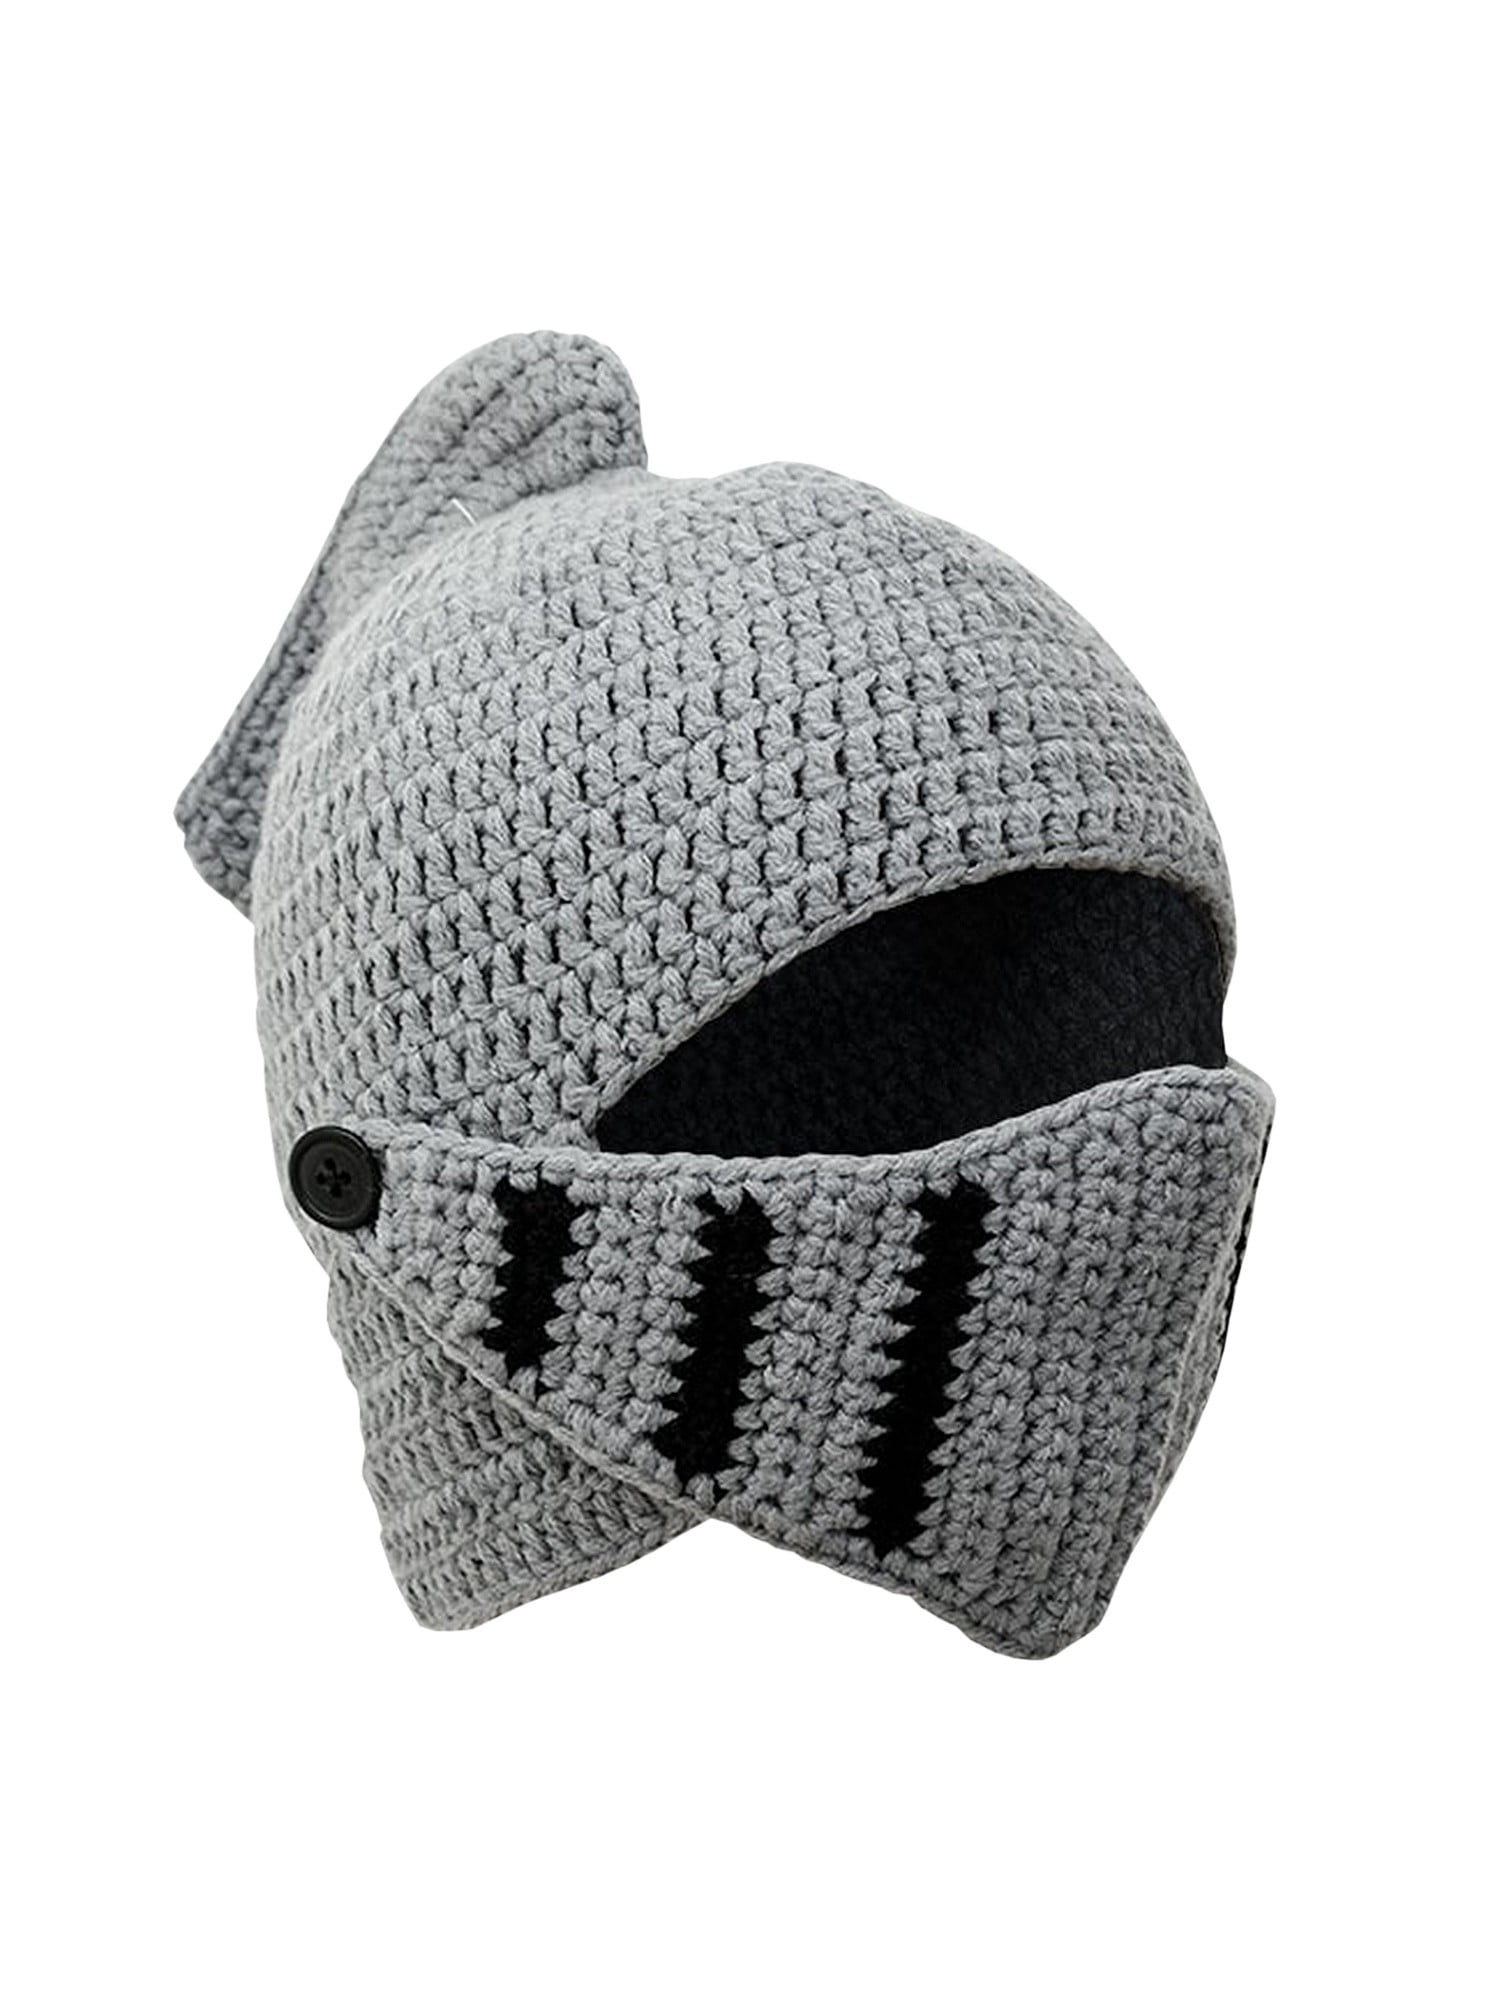  Hand Knitted 0-3 Months Baby Hat/Helmet/Bonnet in Light Grey 